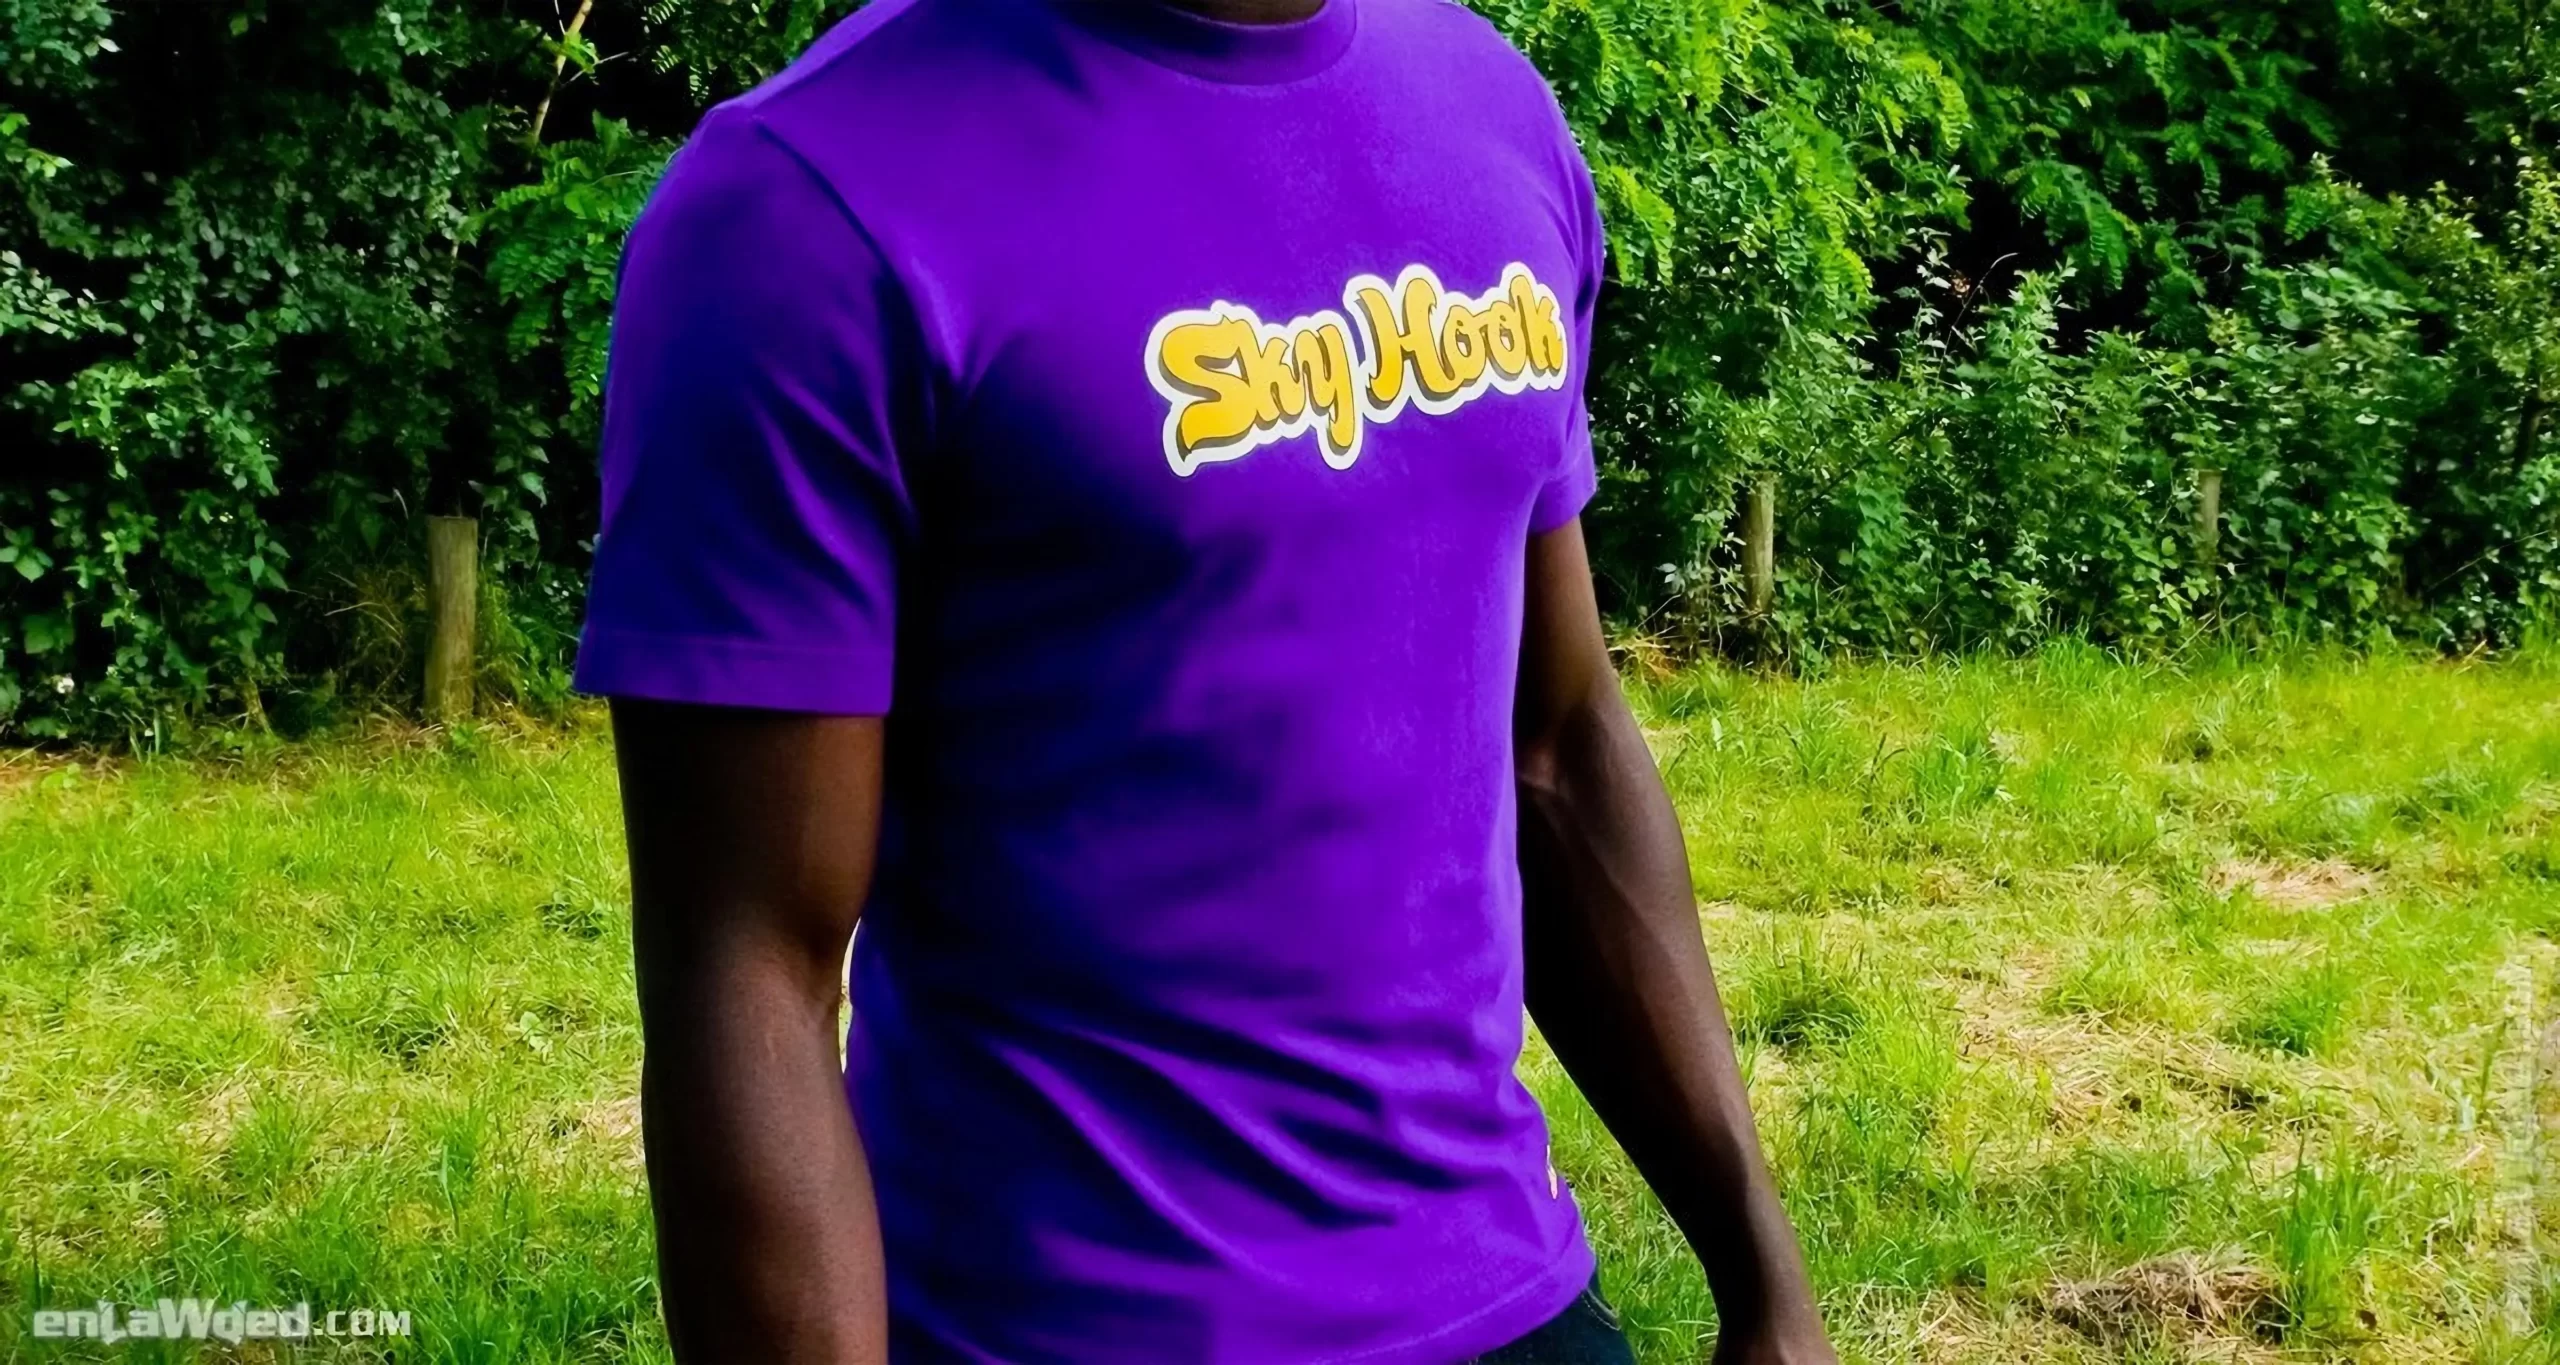 Men’s 2004 SkyHook Lakers #33 T-Shirt by Adidas: Unburdened (EnLawded.com file #lmchk90345ip2y124405kg9st)